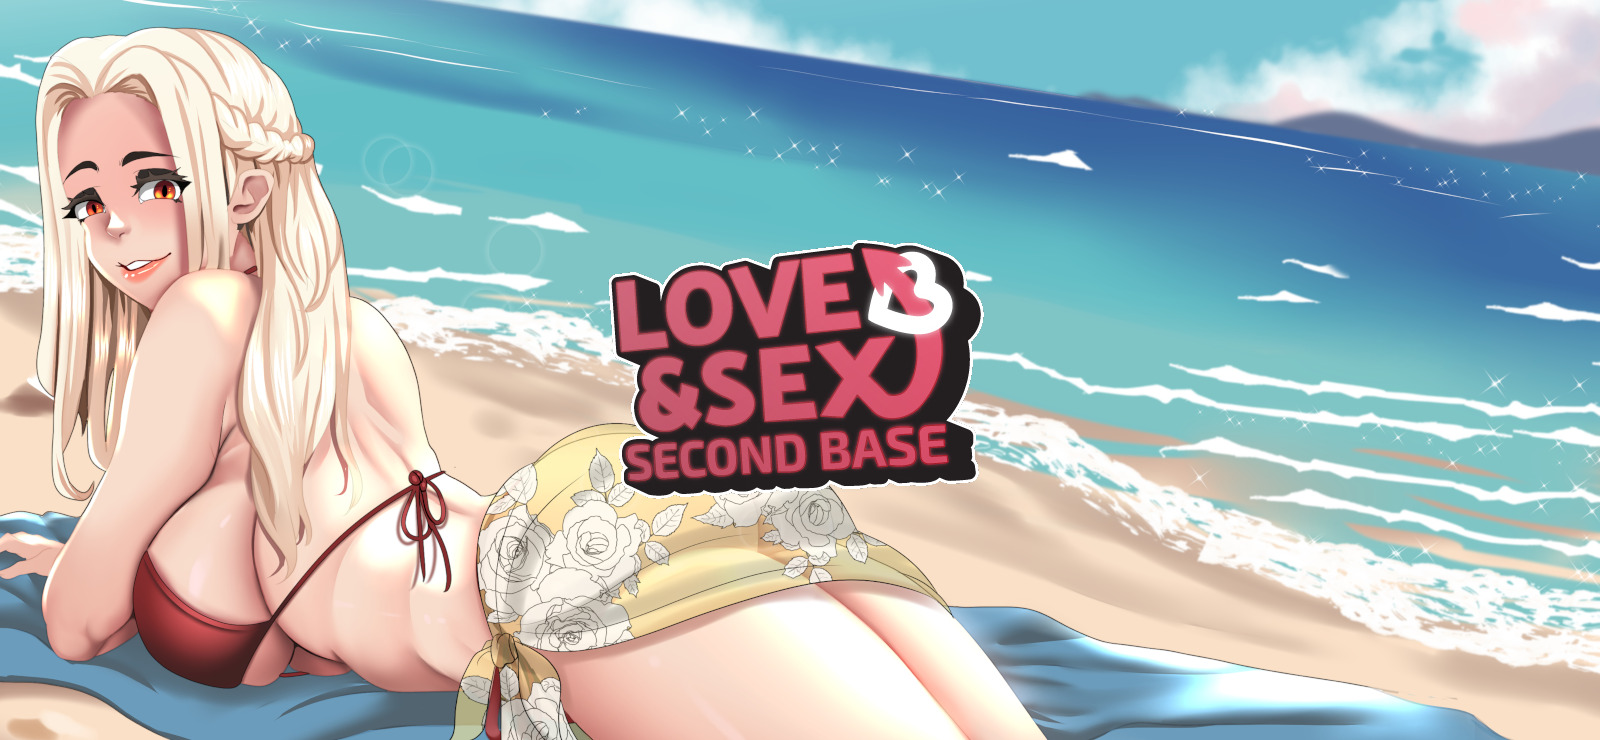 Love & sex: second base